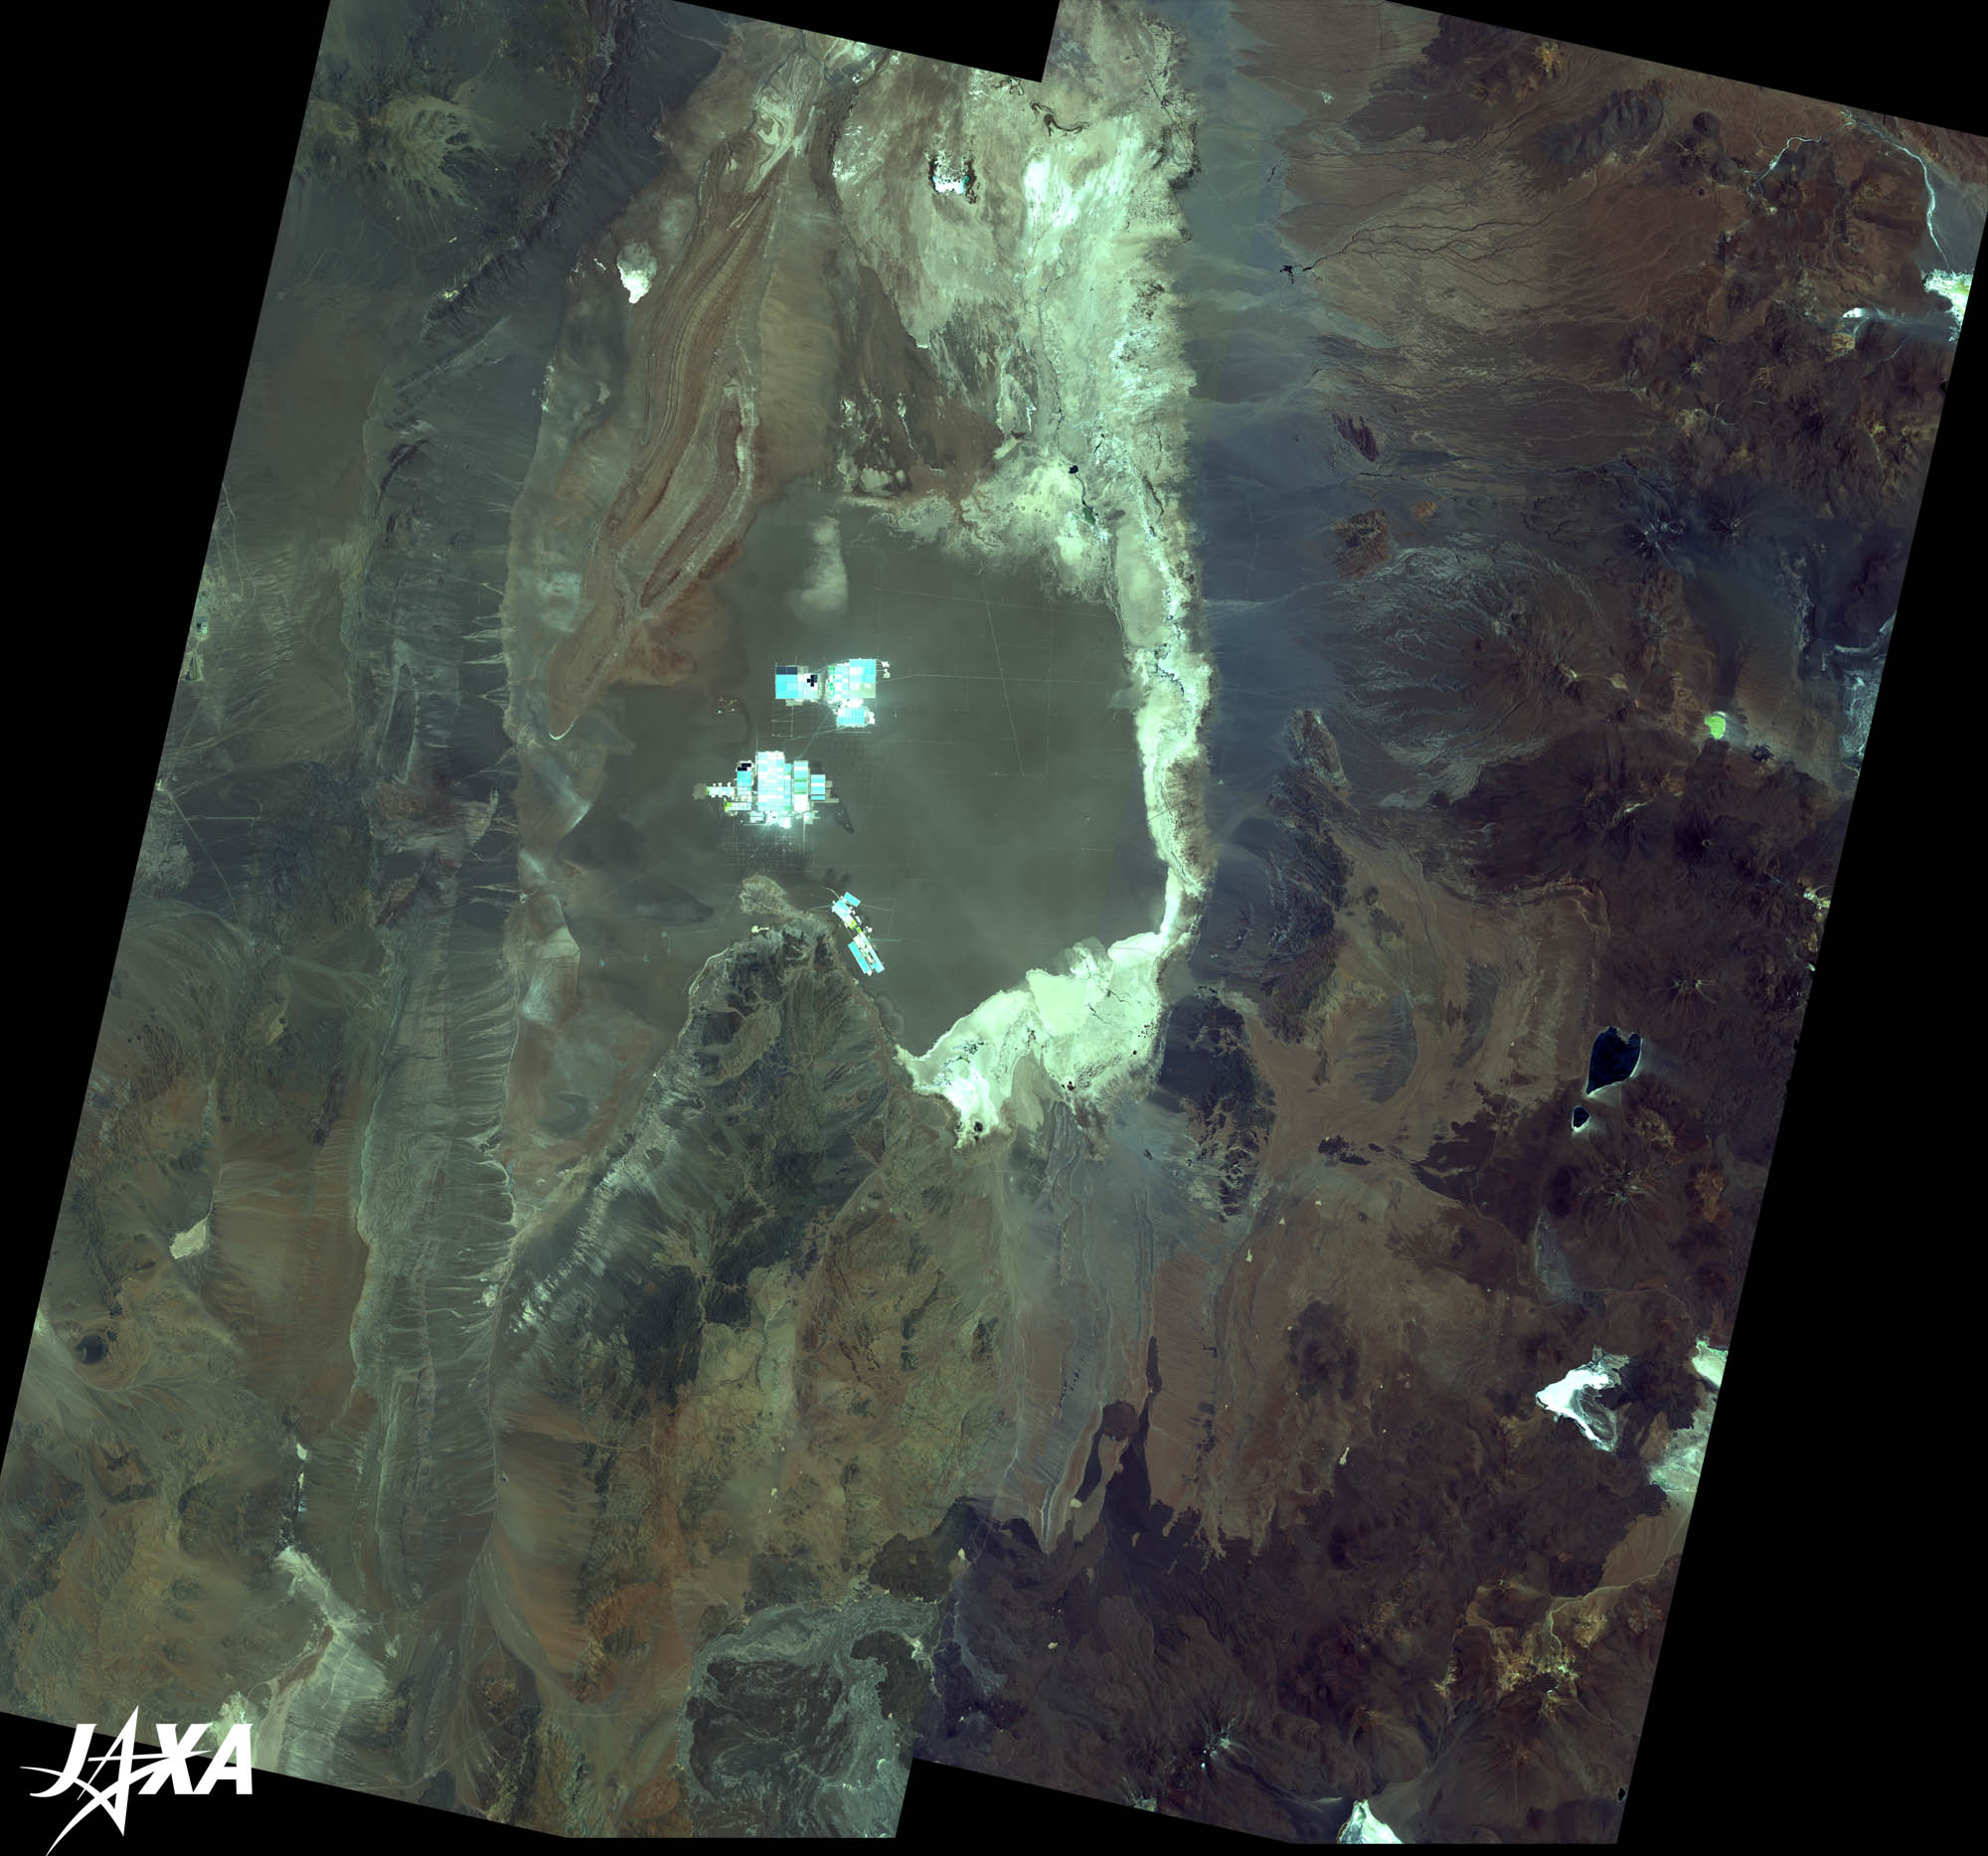 Atacama salt lake